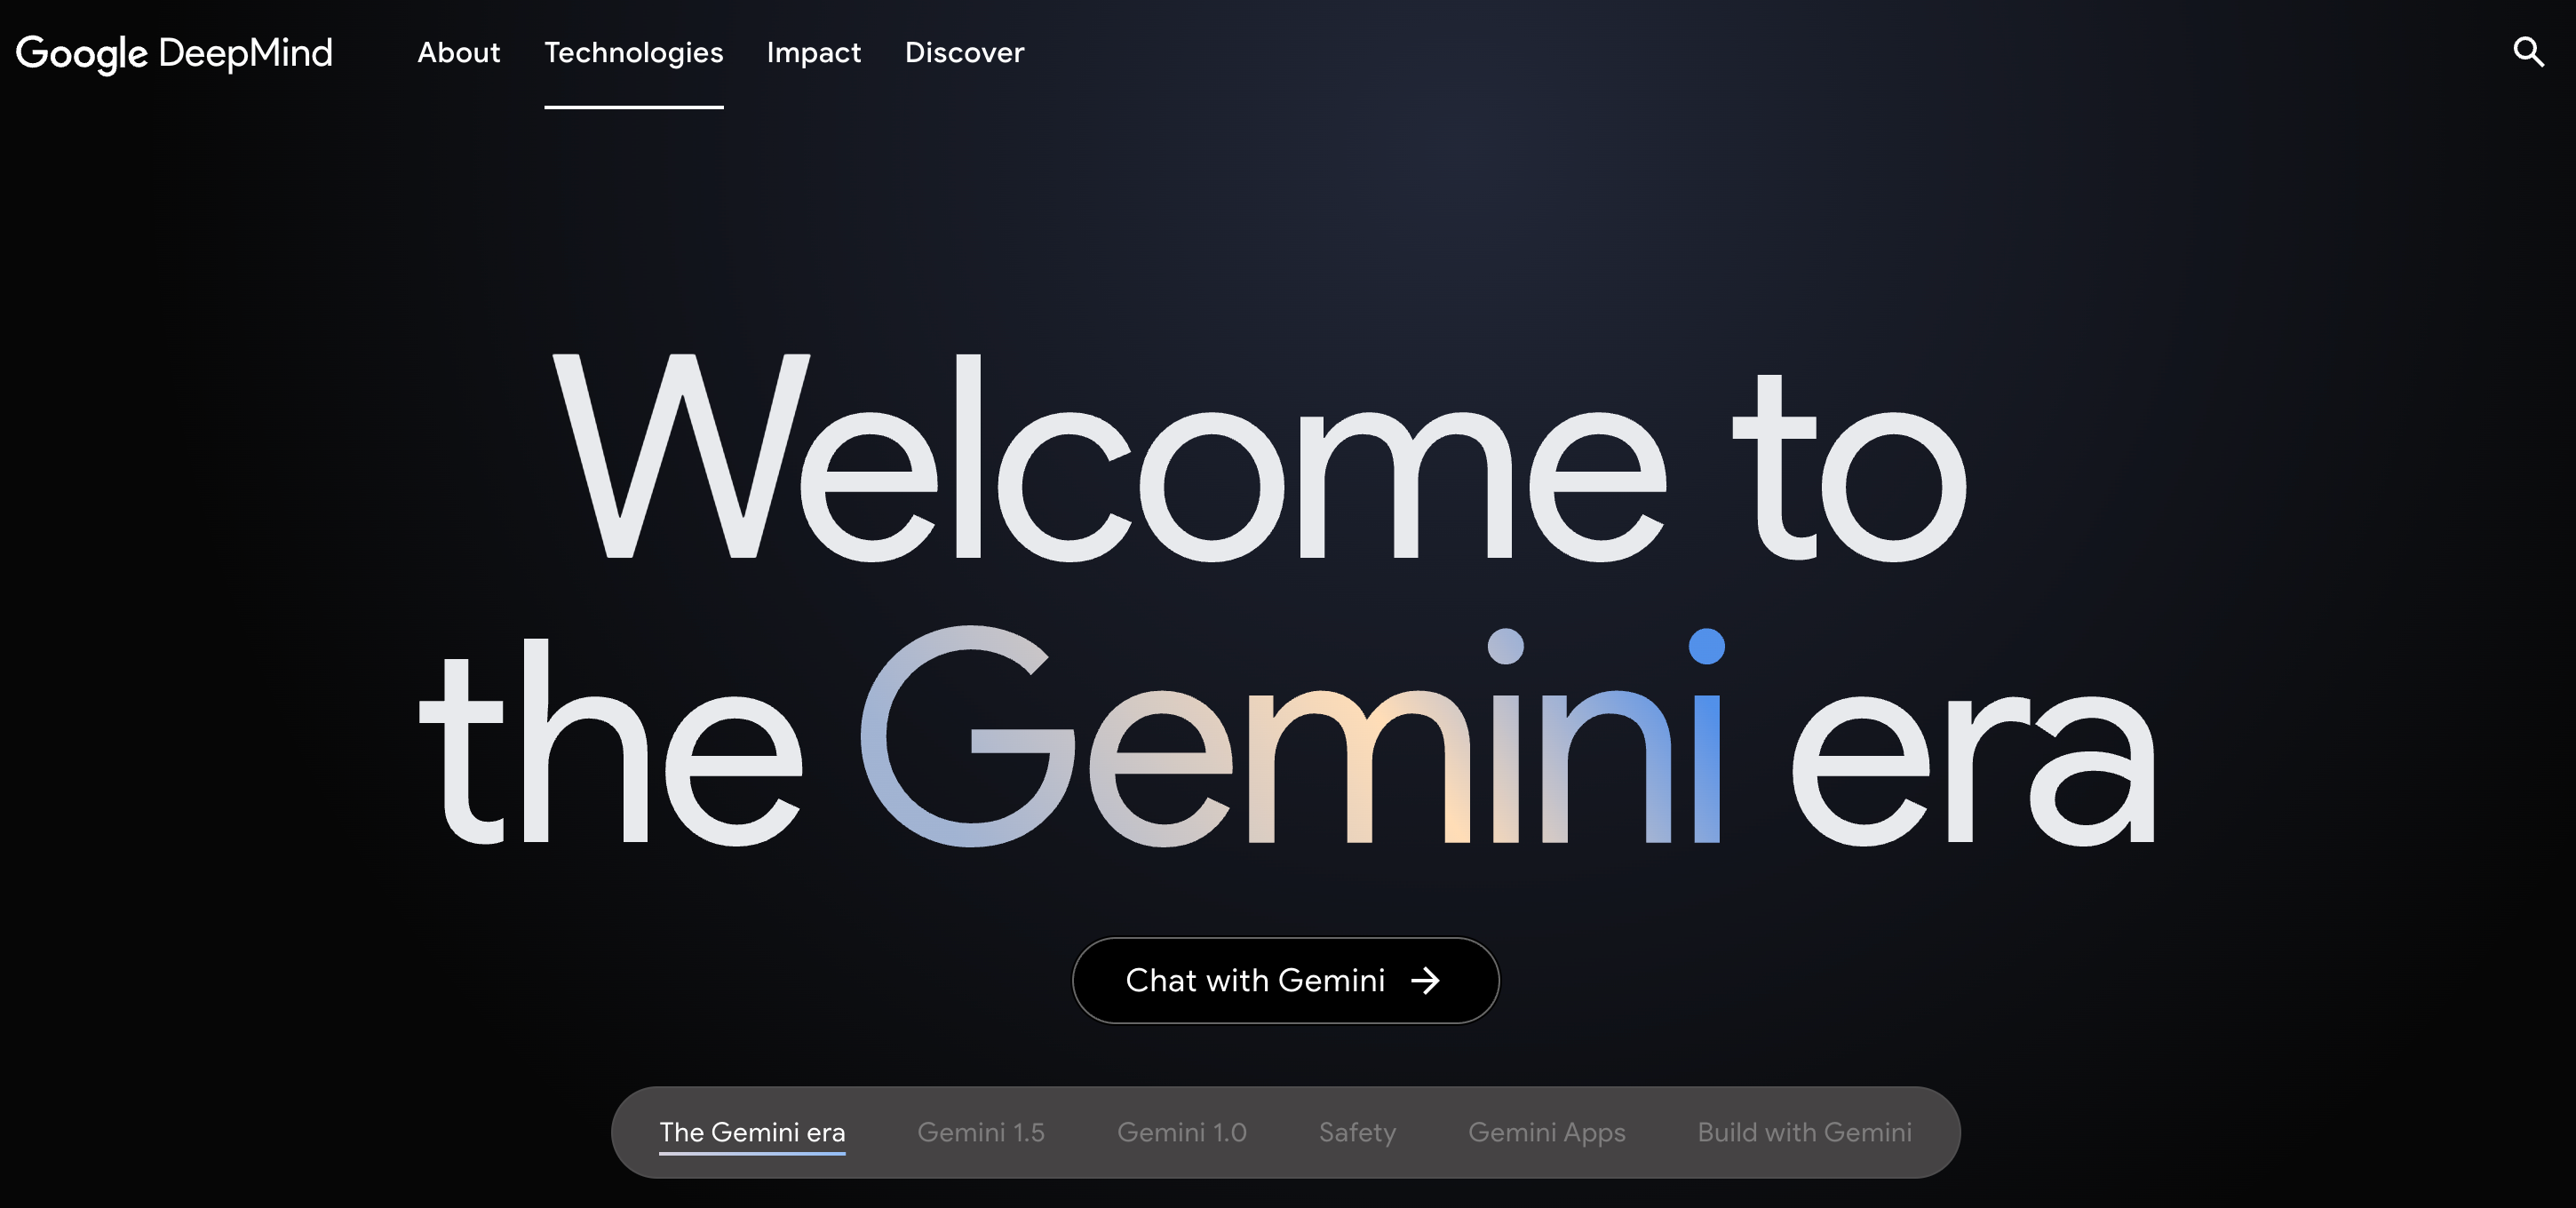 DeepMind's dashboard saying "Welcome to the Gemini era"